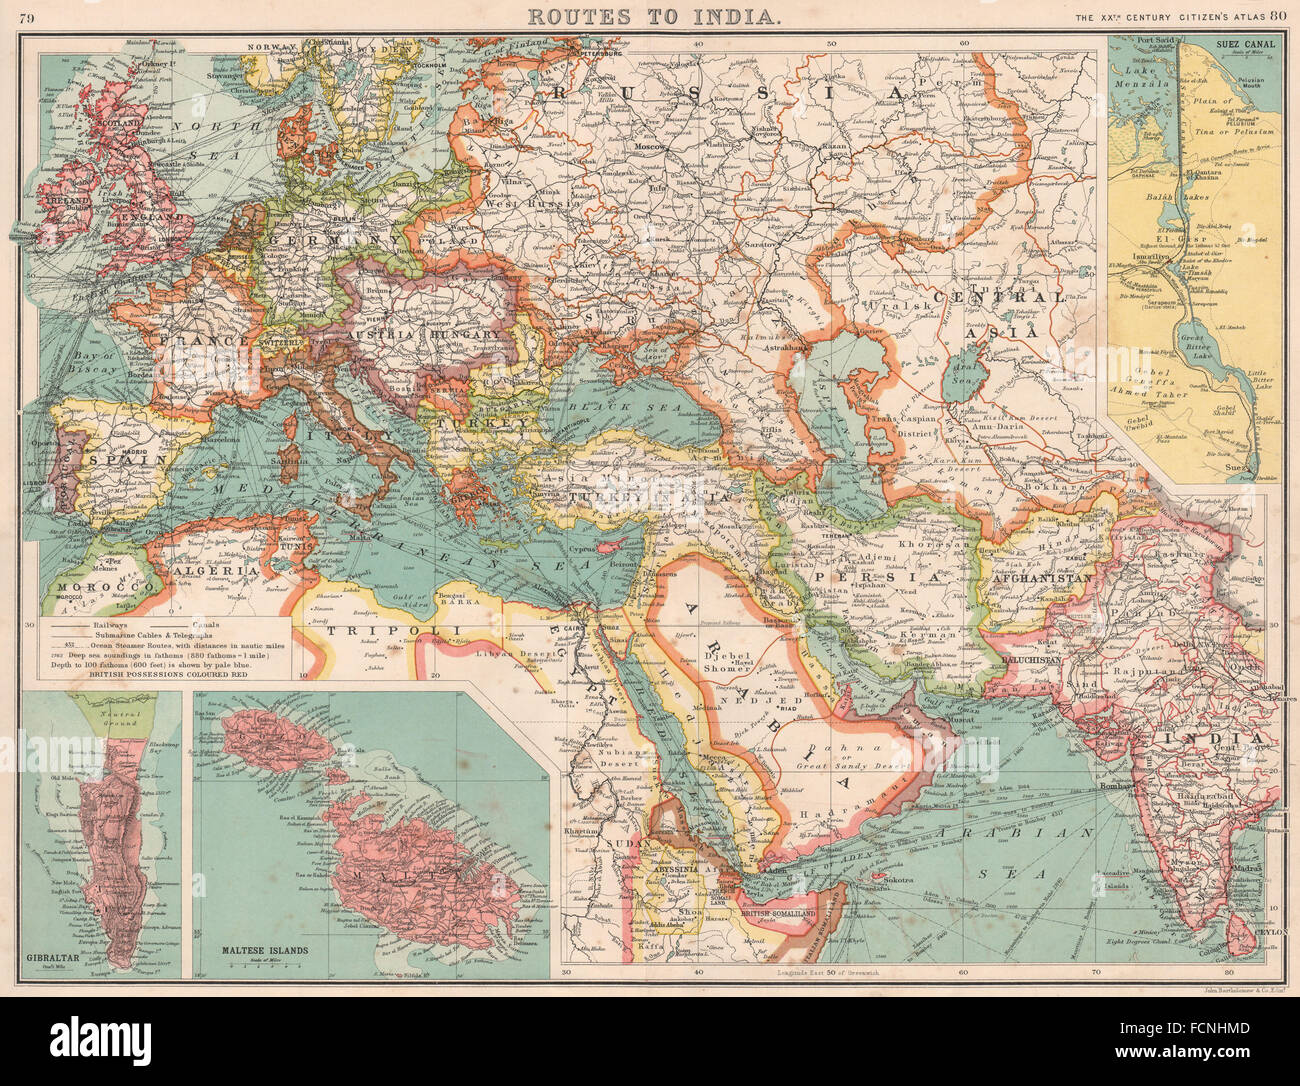 Routen zu Indien: Europa Nahost & Asia.Suez Canal Gibraltar & Malta, 1901-Karte Stockfoto